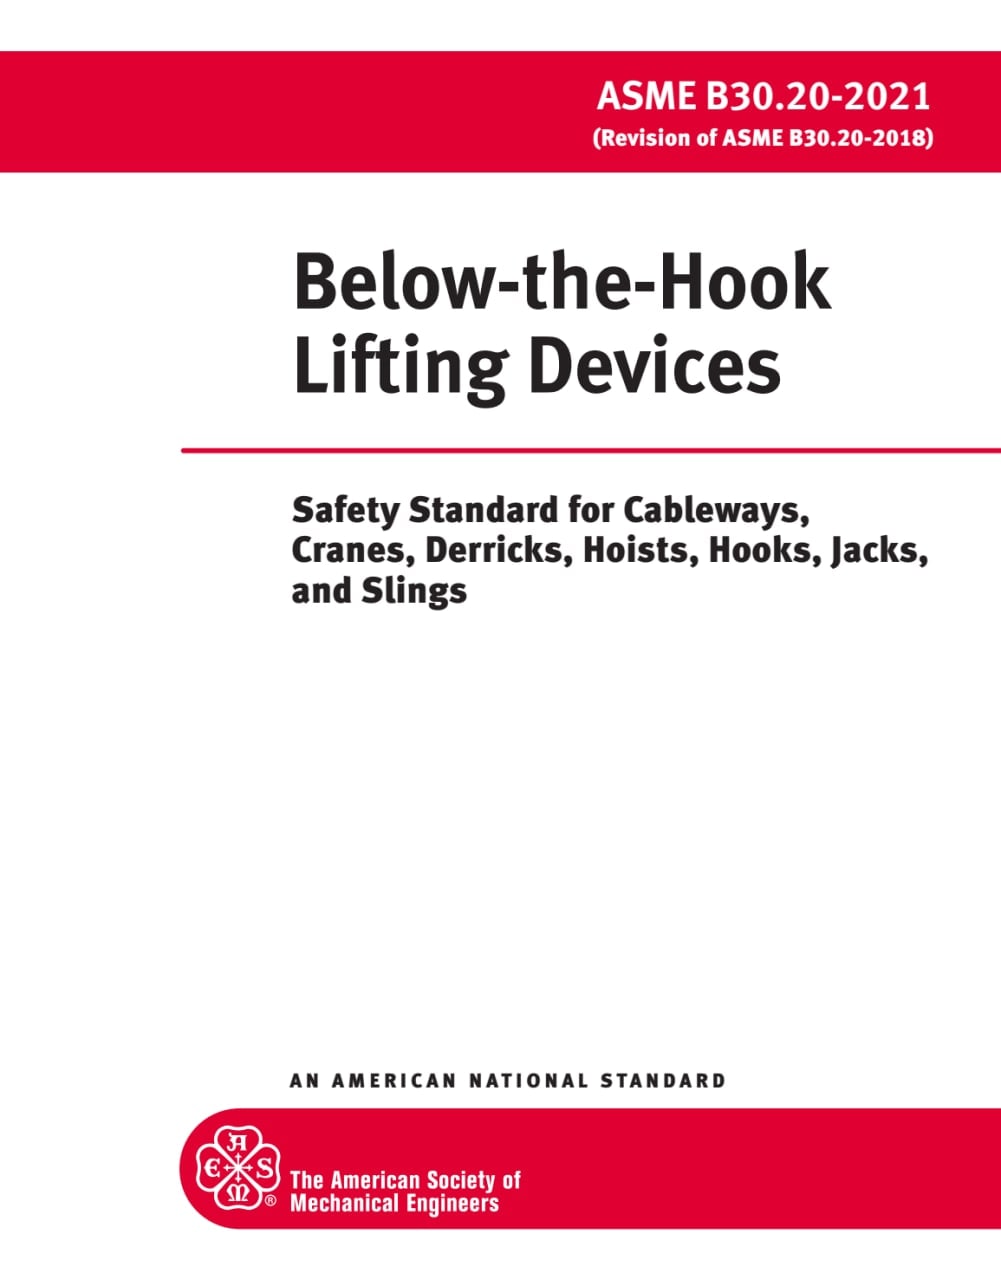 🟡استاندارد ASME B30.20  ویرایش 2021  🌺ASME B30.20 2021  ♦️Below-the-Hook Lifting Devices:Safety Standard for Cableways, Cranes, Derricks, Hoists, Hooks, Jacks, and Slings